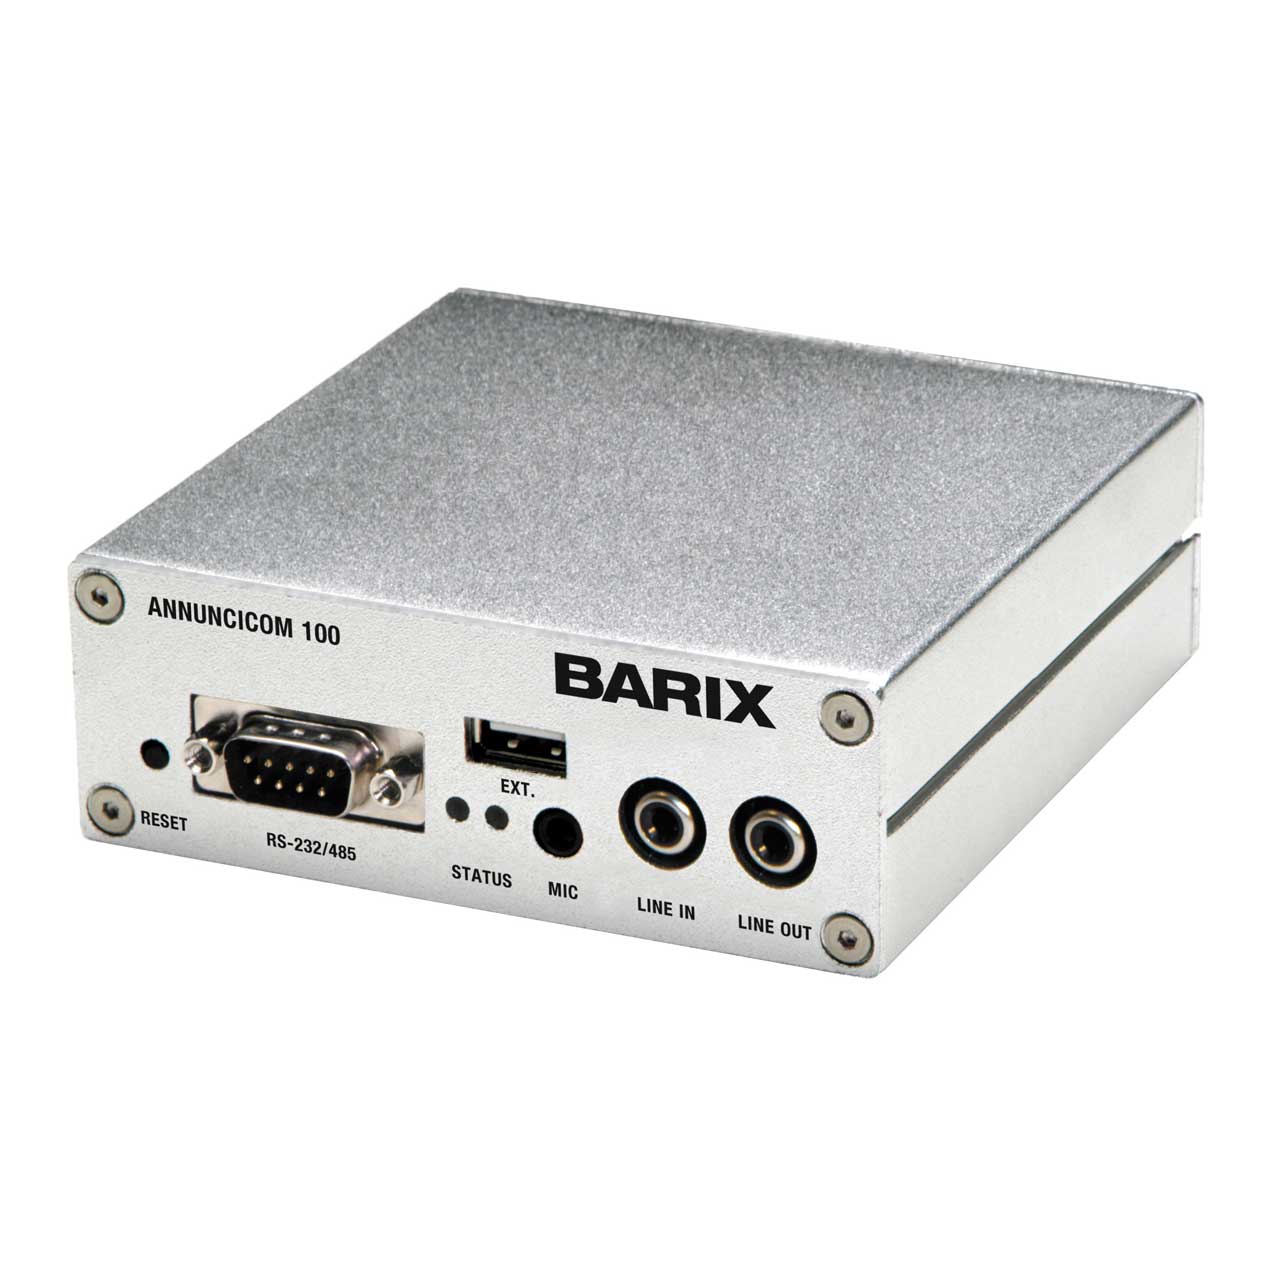 Barix Annuncicom 100 IP Paging and Intercom Device